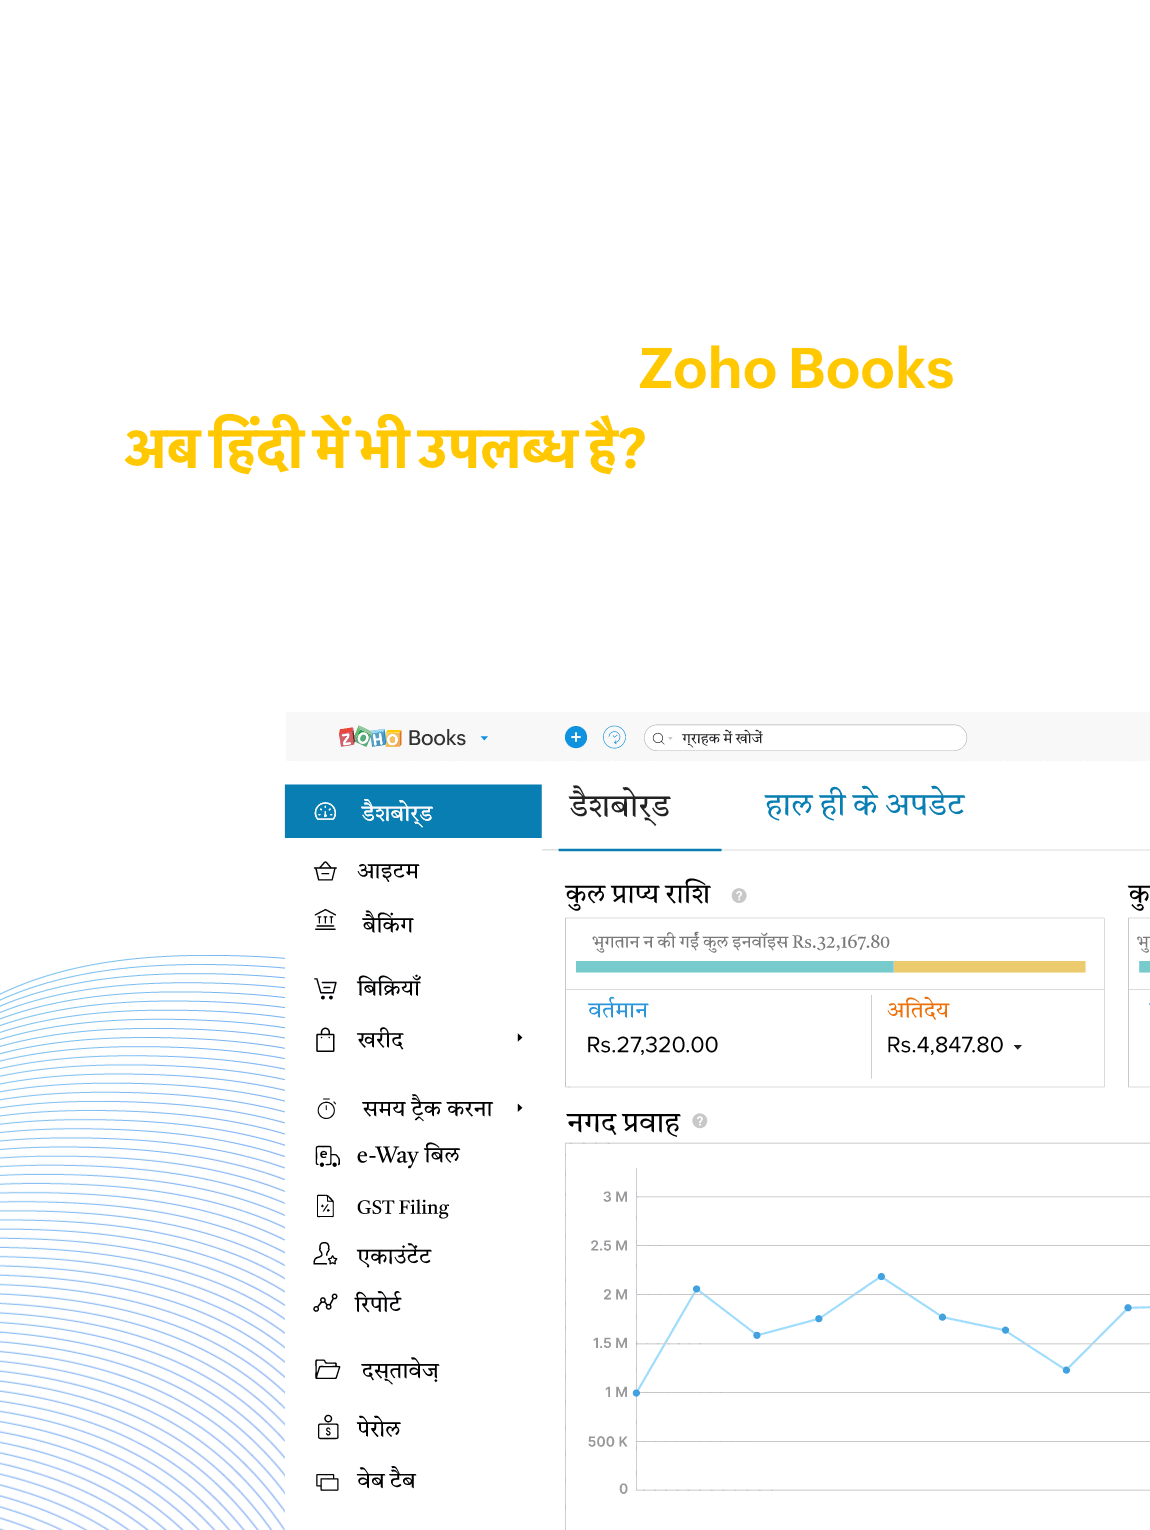 Zoho Books available in Hindi language